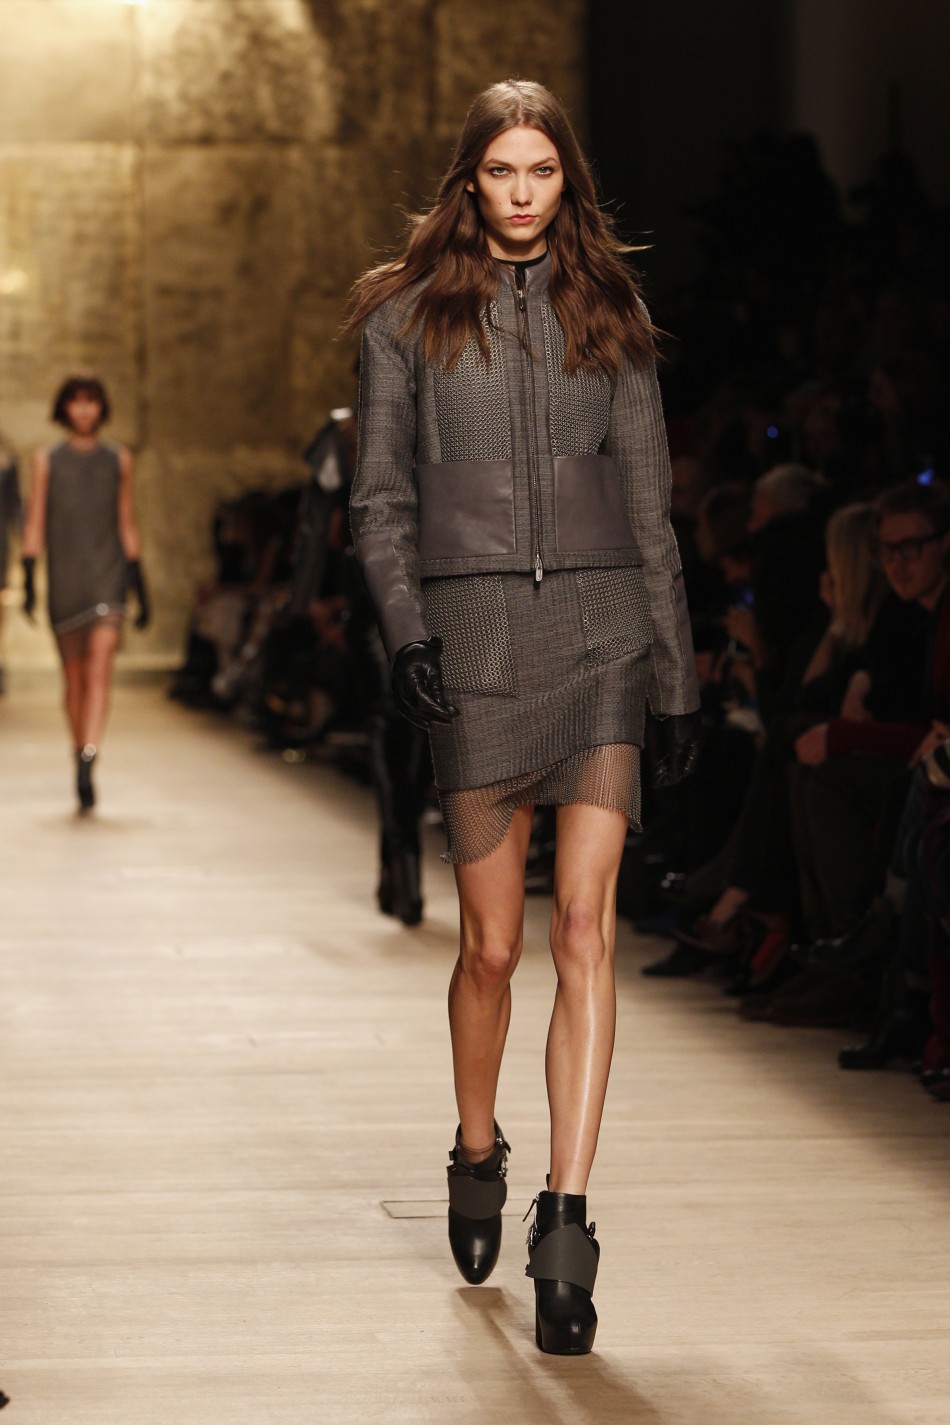 Karle Kloss Catwalk Return Modelss Top 10 Looks at Paris Fashion Week